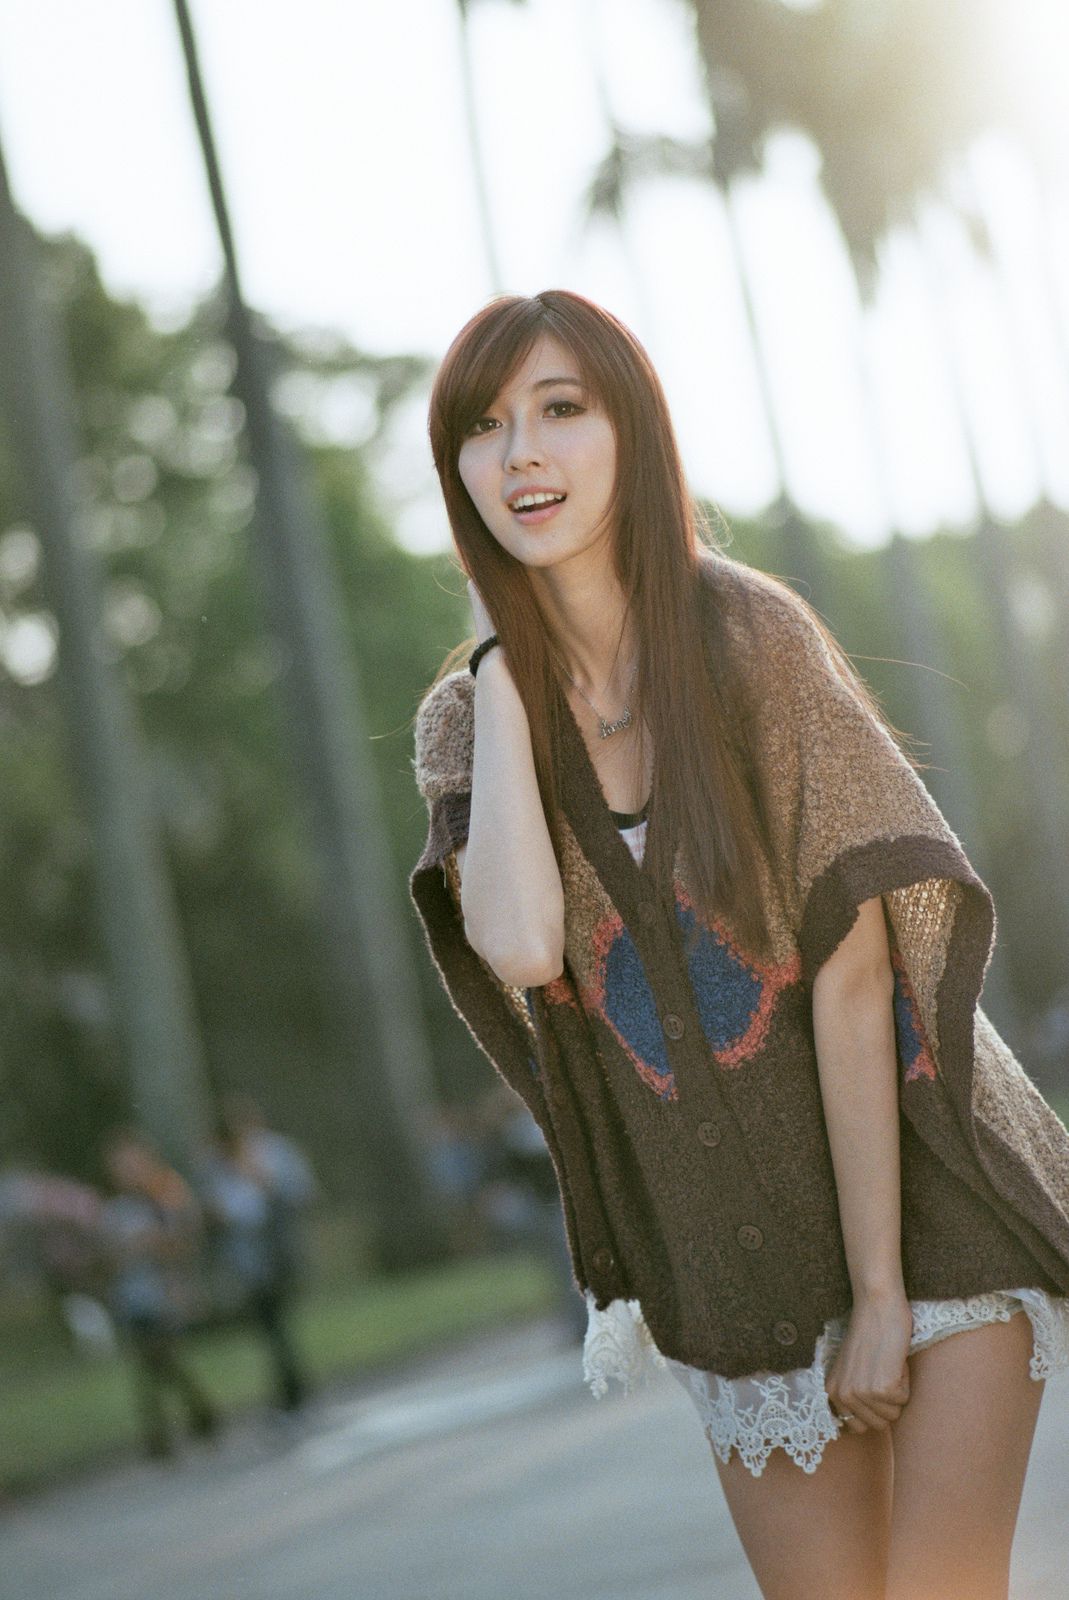 Jin Yunji / KILA Crystal “Campus Beauty” 2nd Wave Collection